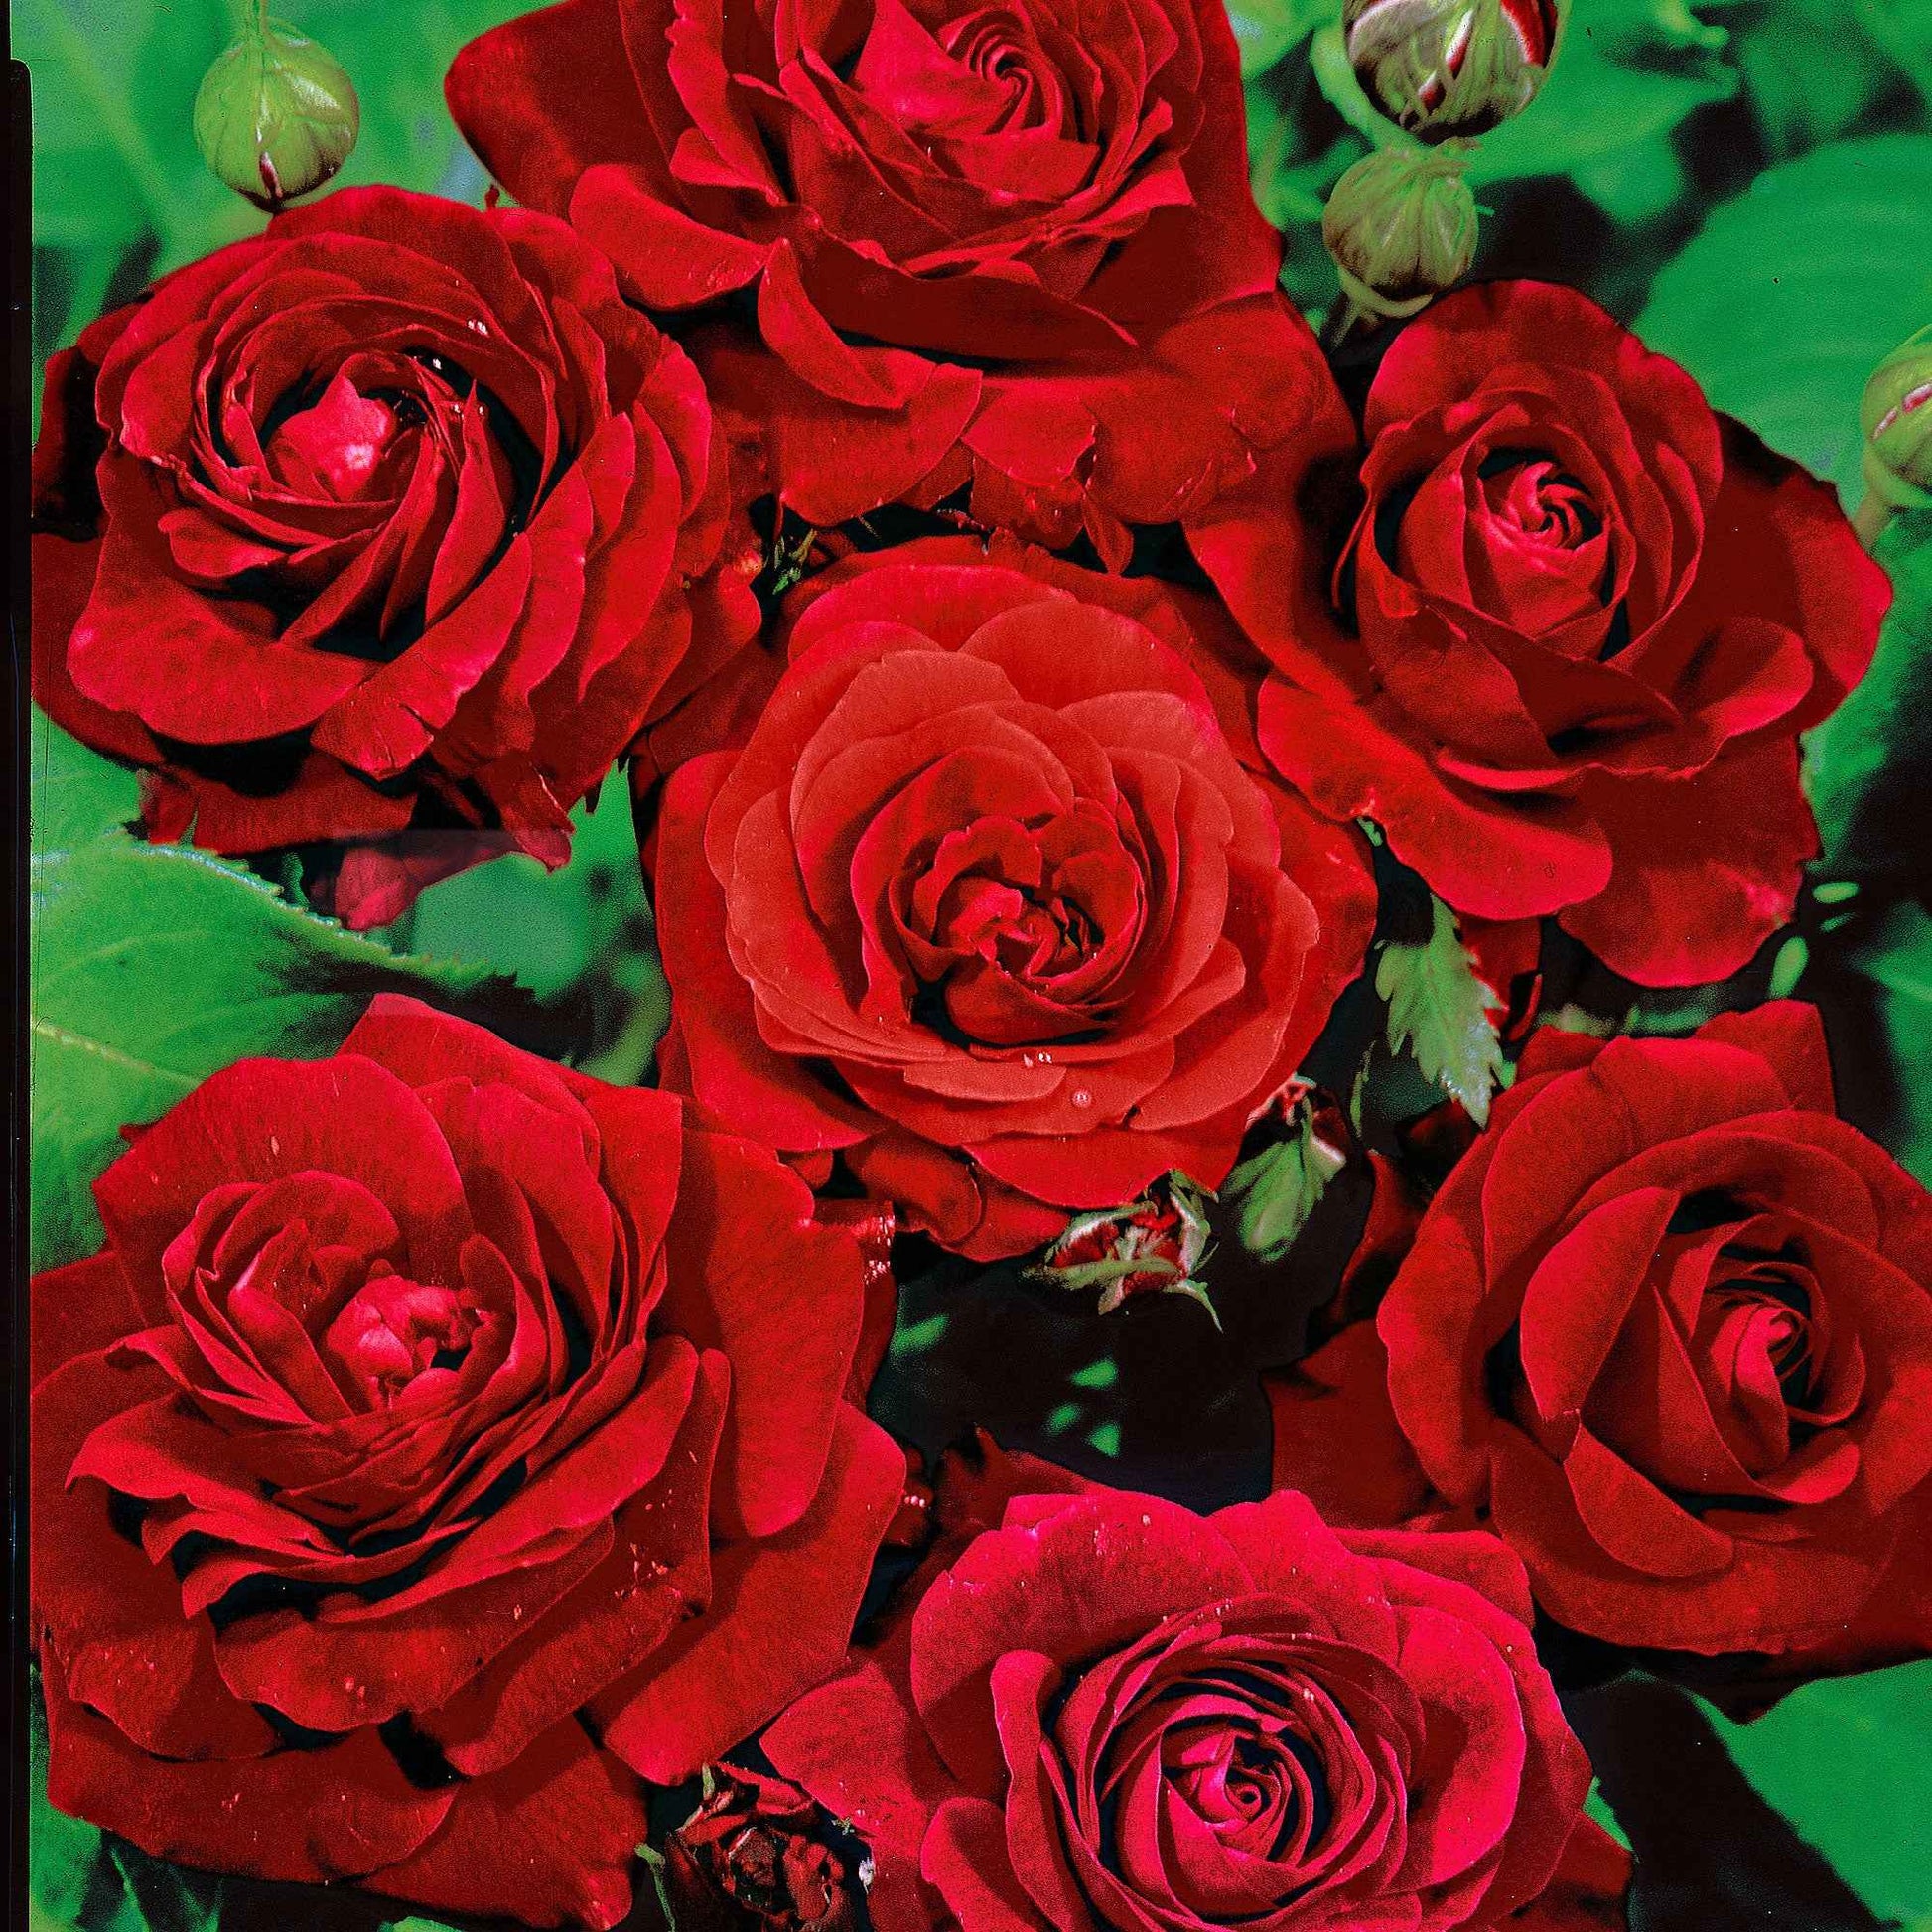 Trosroos Rosa Nina Rosa ® Rood - Bare rooted - Winterhard - Geurende rozen